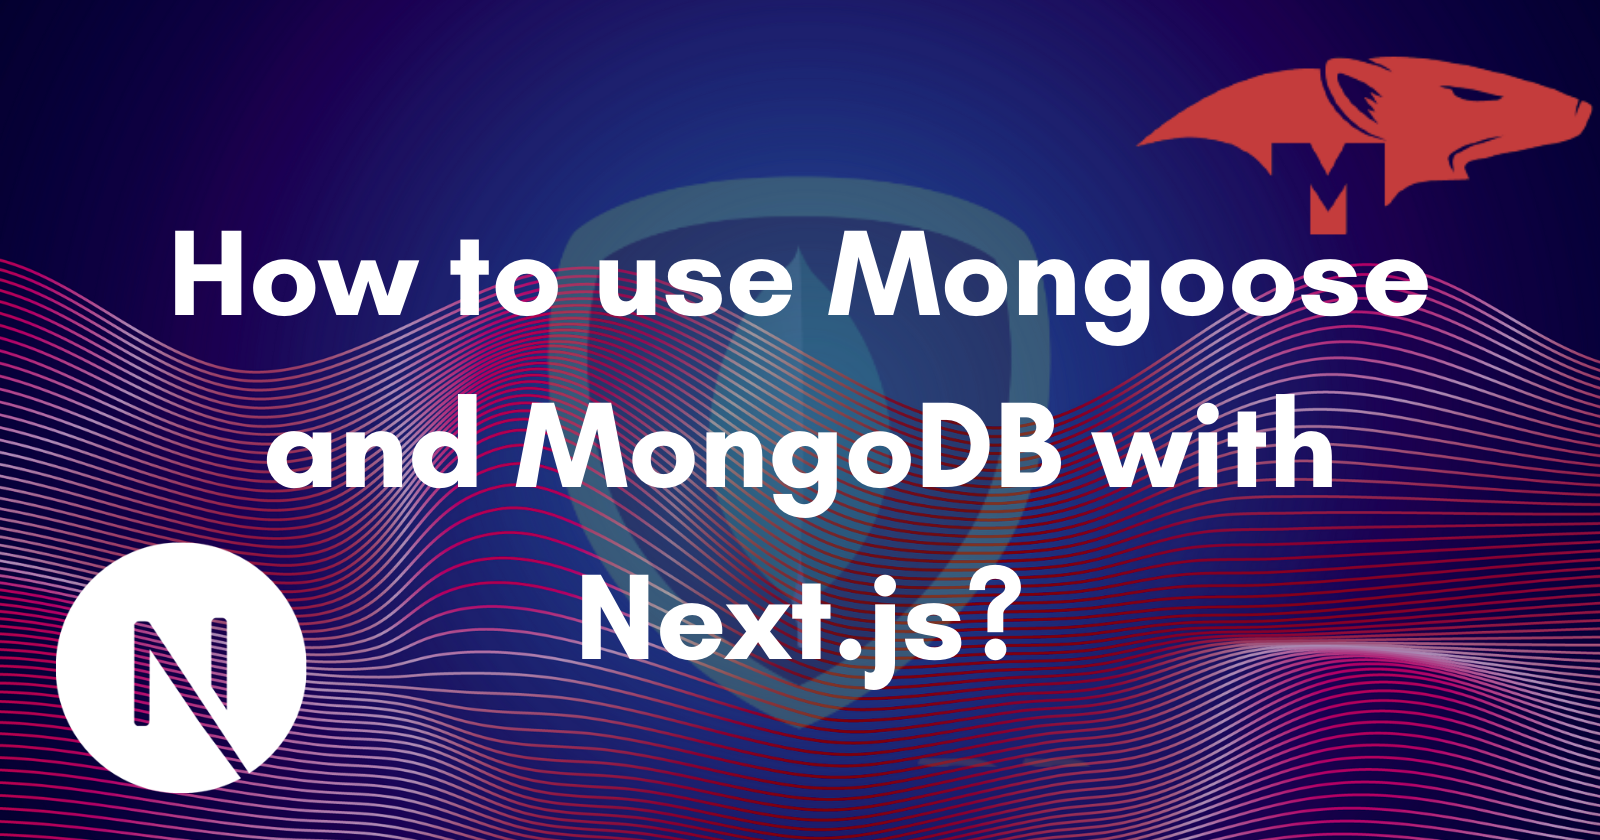 ðŸ—ƒï¸� How to use Mongoose with Next.js for MongoDB?